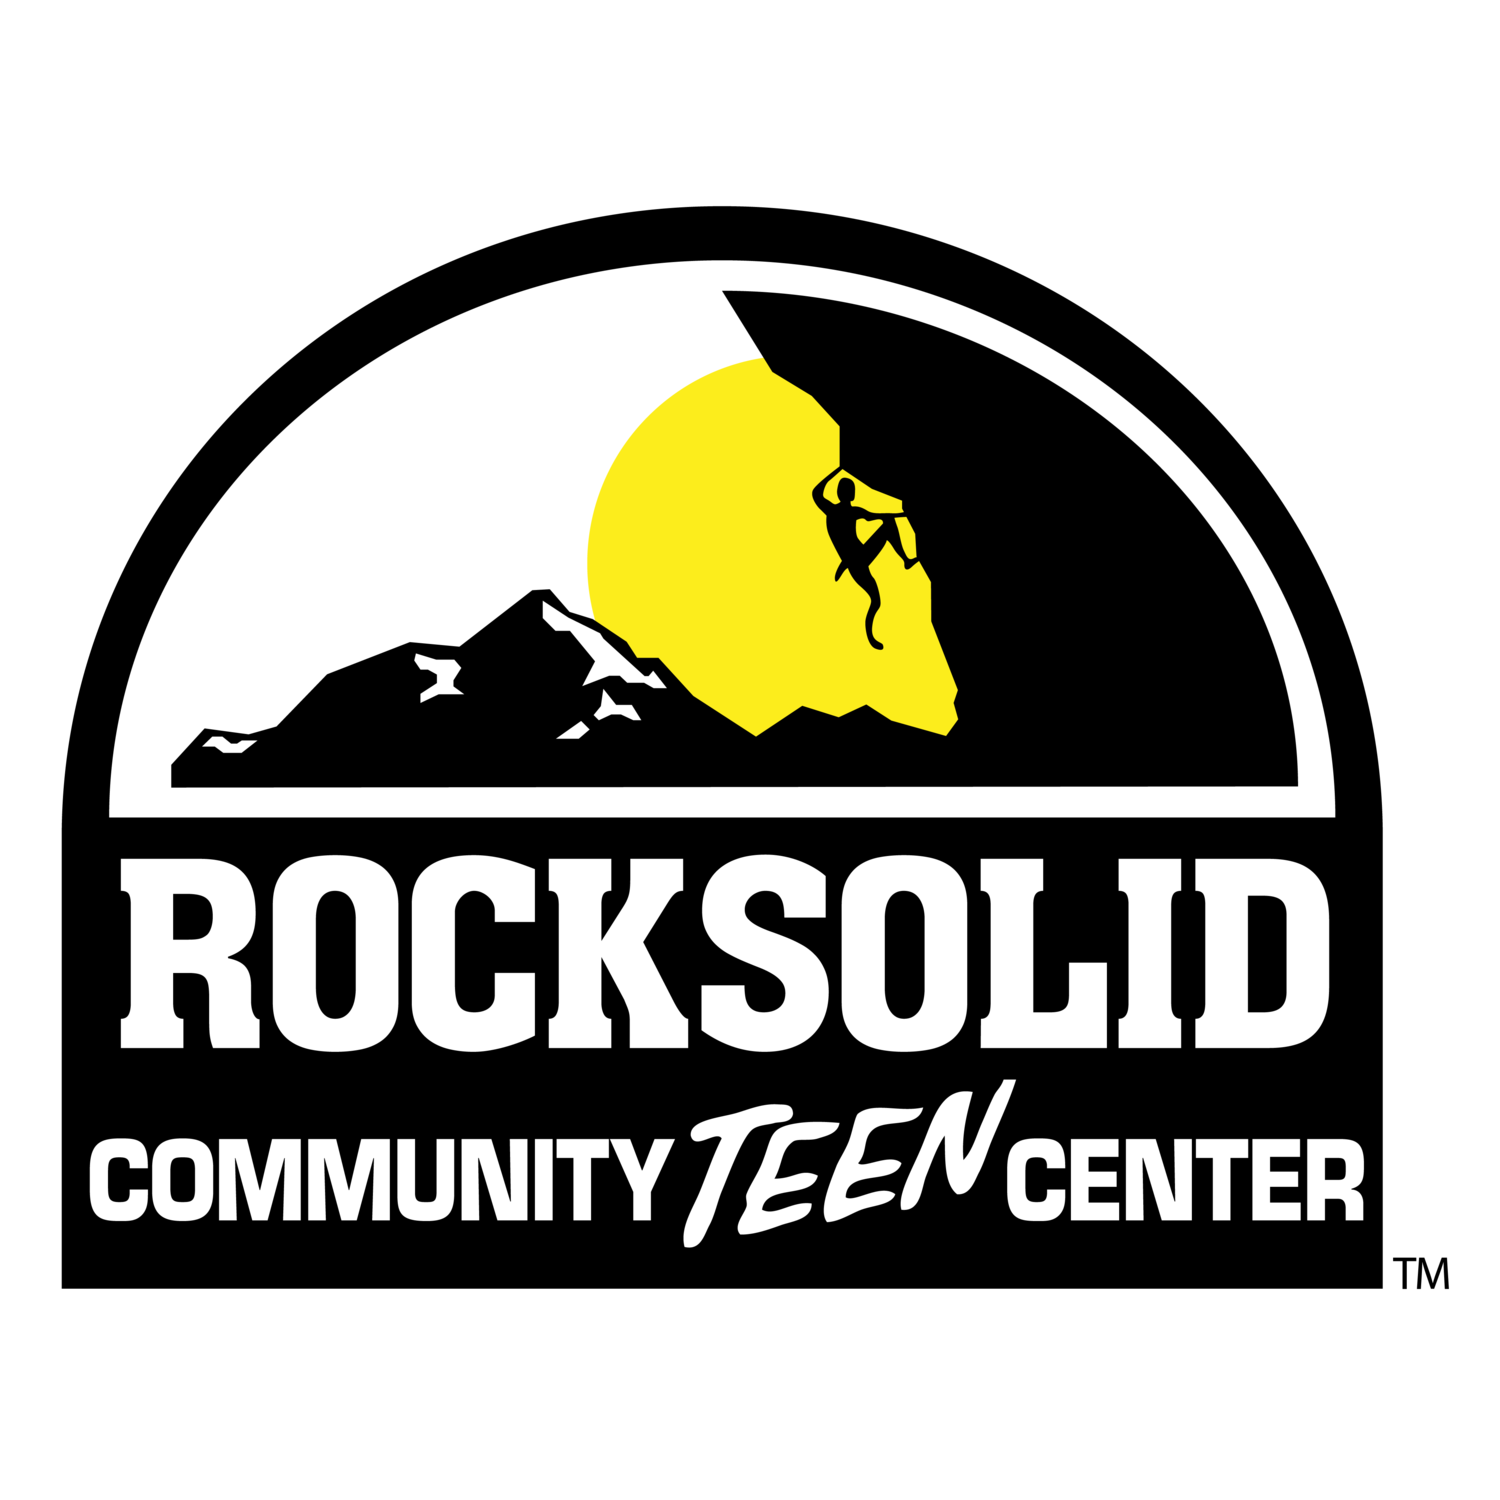 Rocksolid Community Teen Center